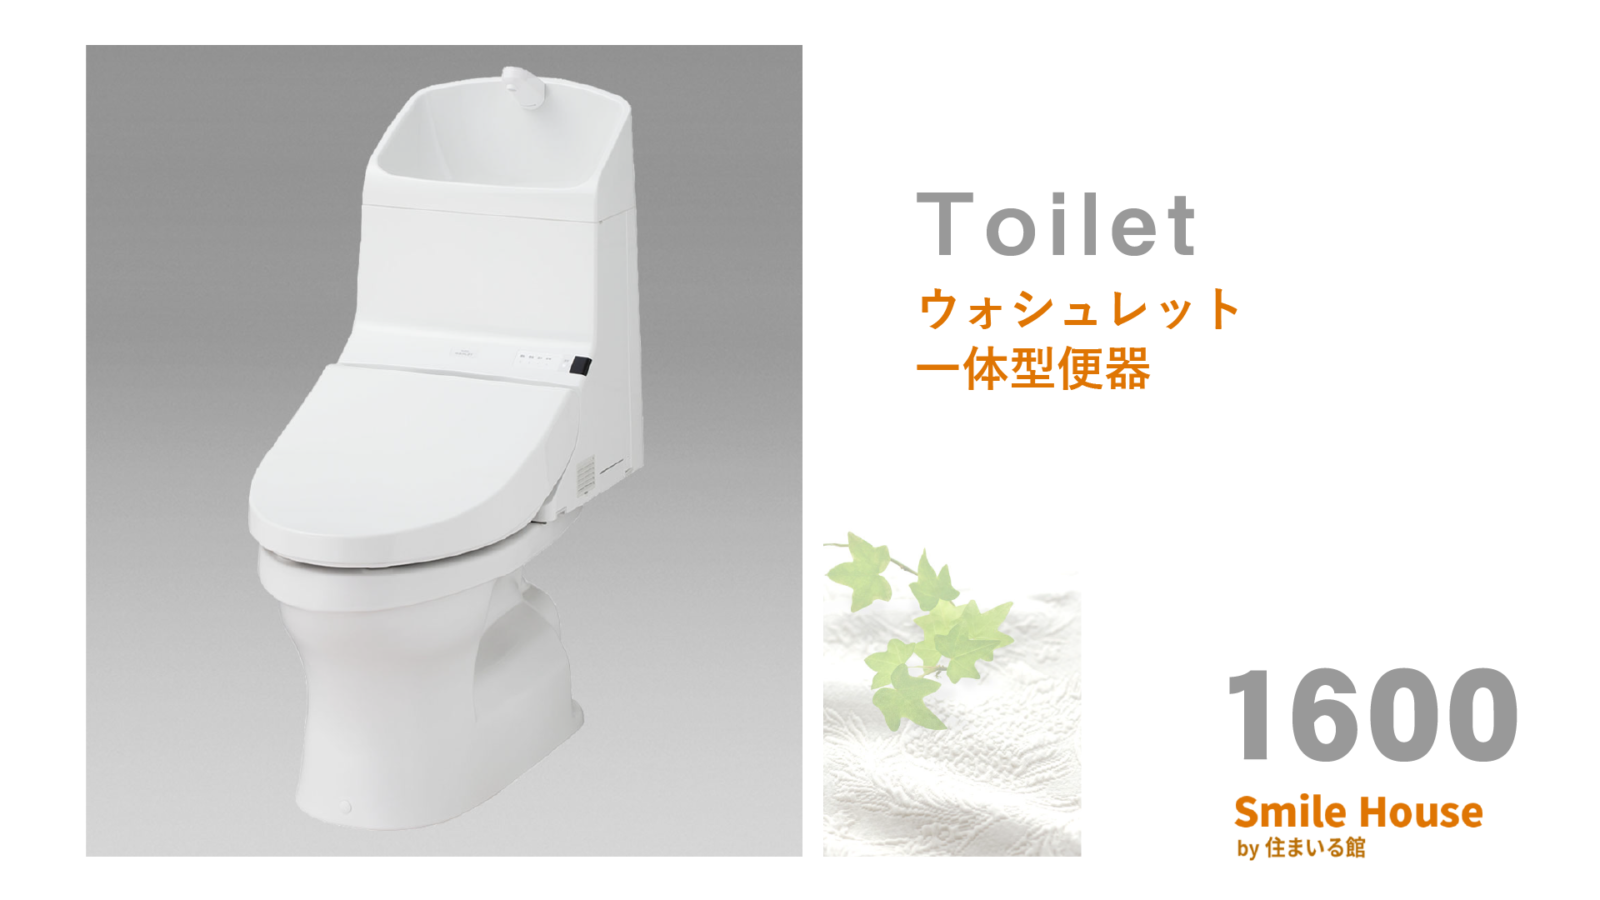 Toilet_2_1600